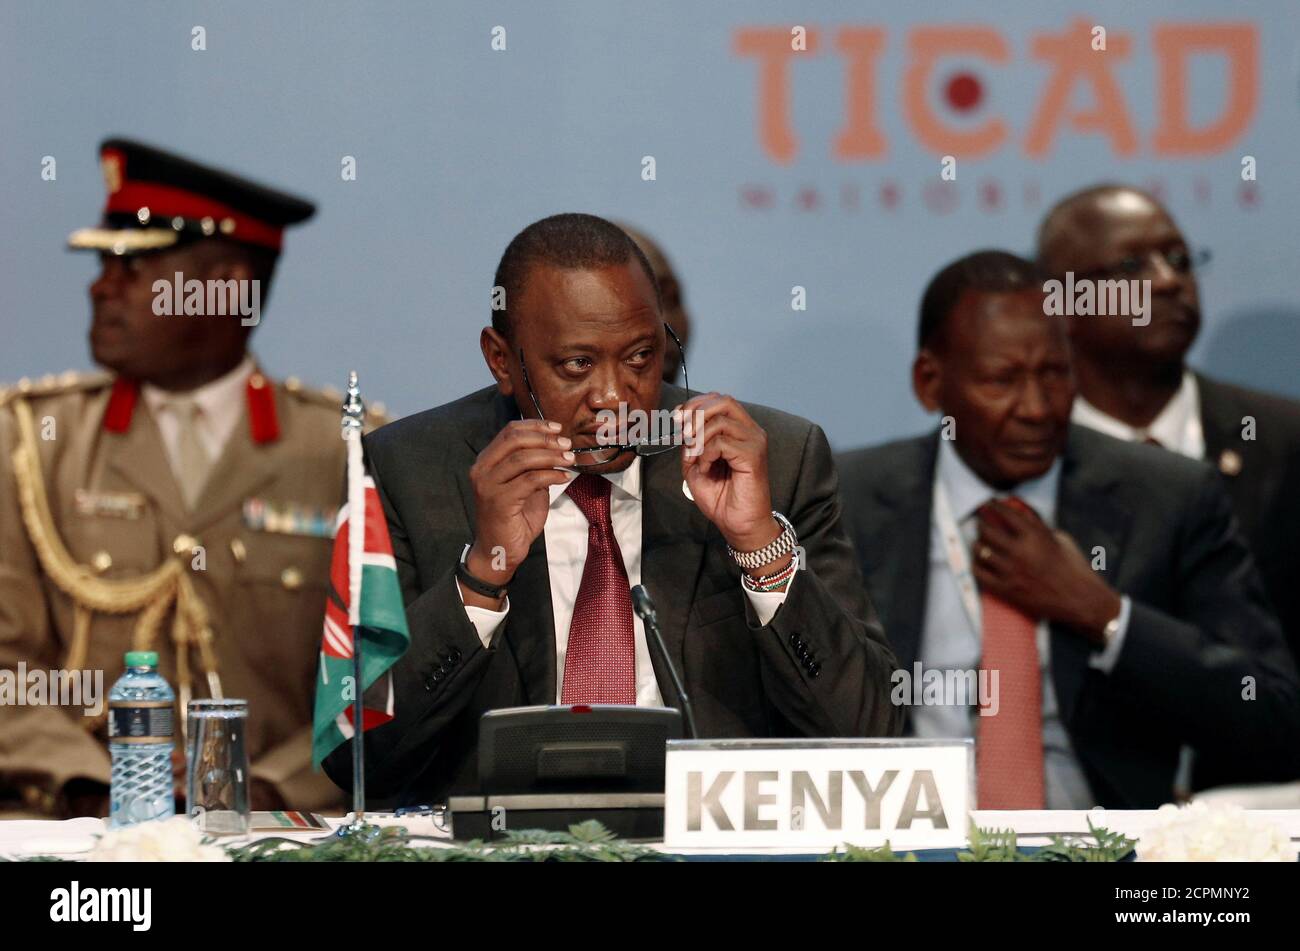 Kenya's President Uhuru Kenyatta attends the Sixth Tokyo International Conference on African Development (TICAD VI) in Kenya's capital Nairobi, August 27, 2016. REUTERS/Thomas Mukoya Stock Photo